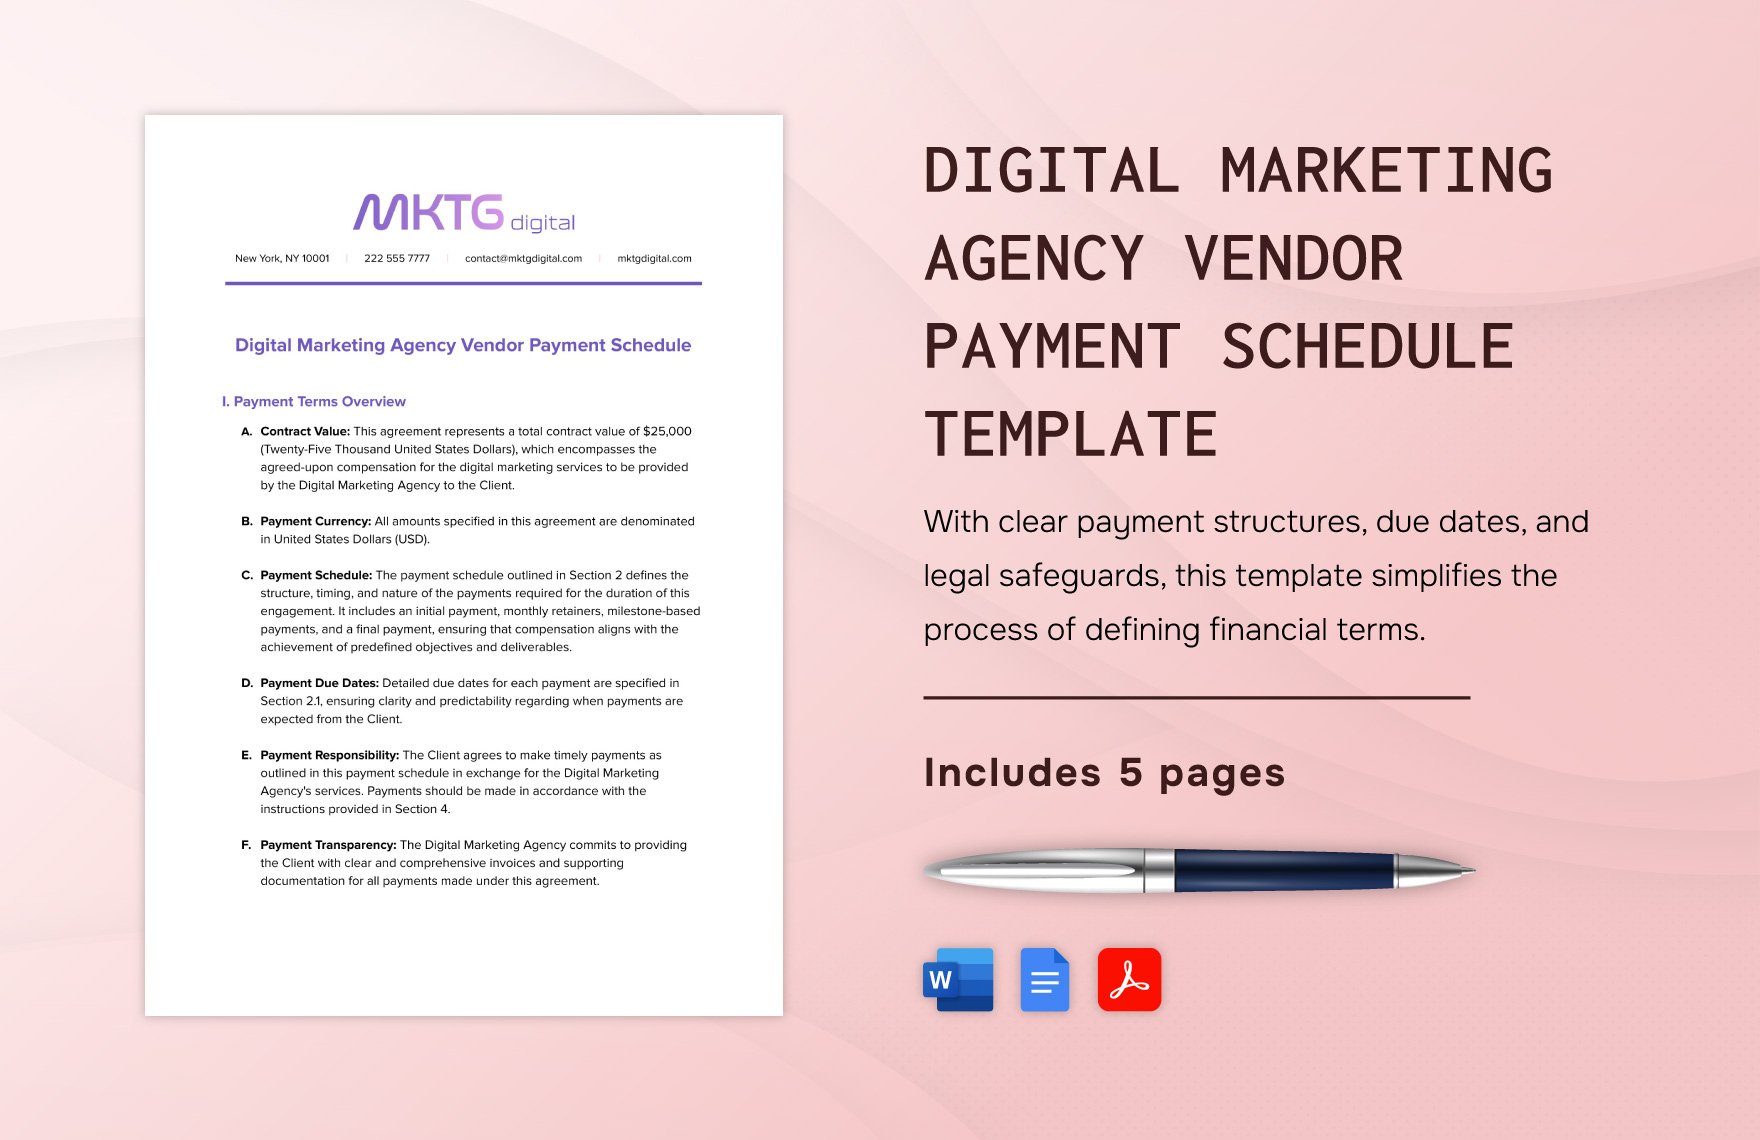 Digital Marketing Agency Vendor Payment Schedule Template